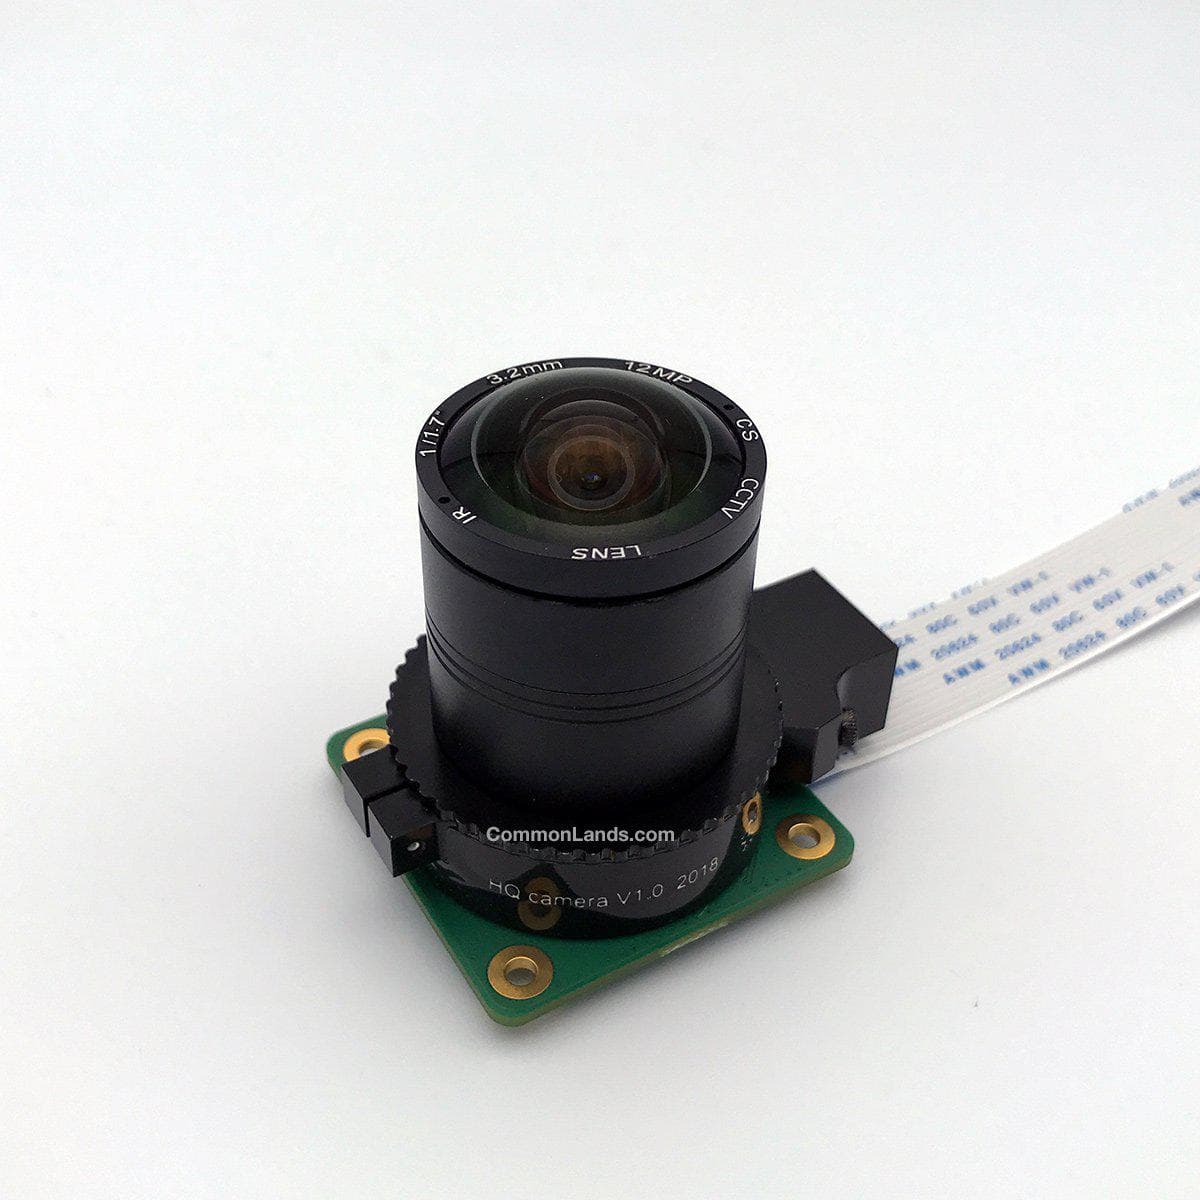 Das CommonLands CIL03.2-F1.8-CSNOIR 3.2mm EFL Objektiv ist mit der Raspberry Pi HQ Kamera abgebildet.